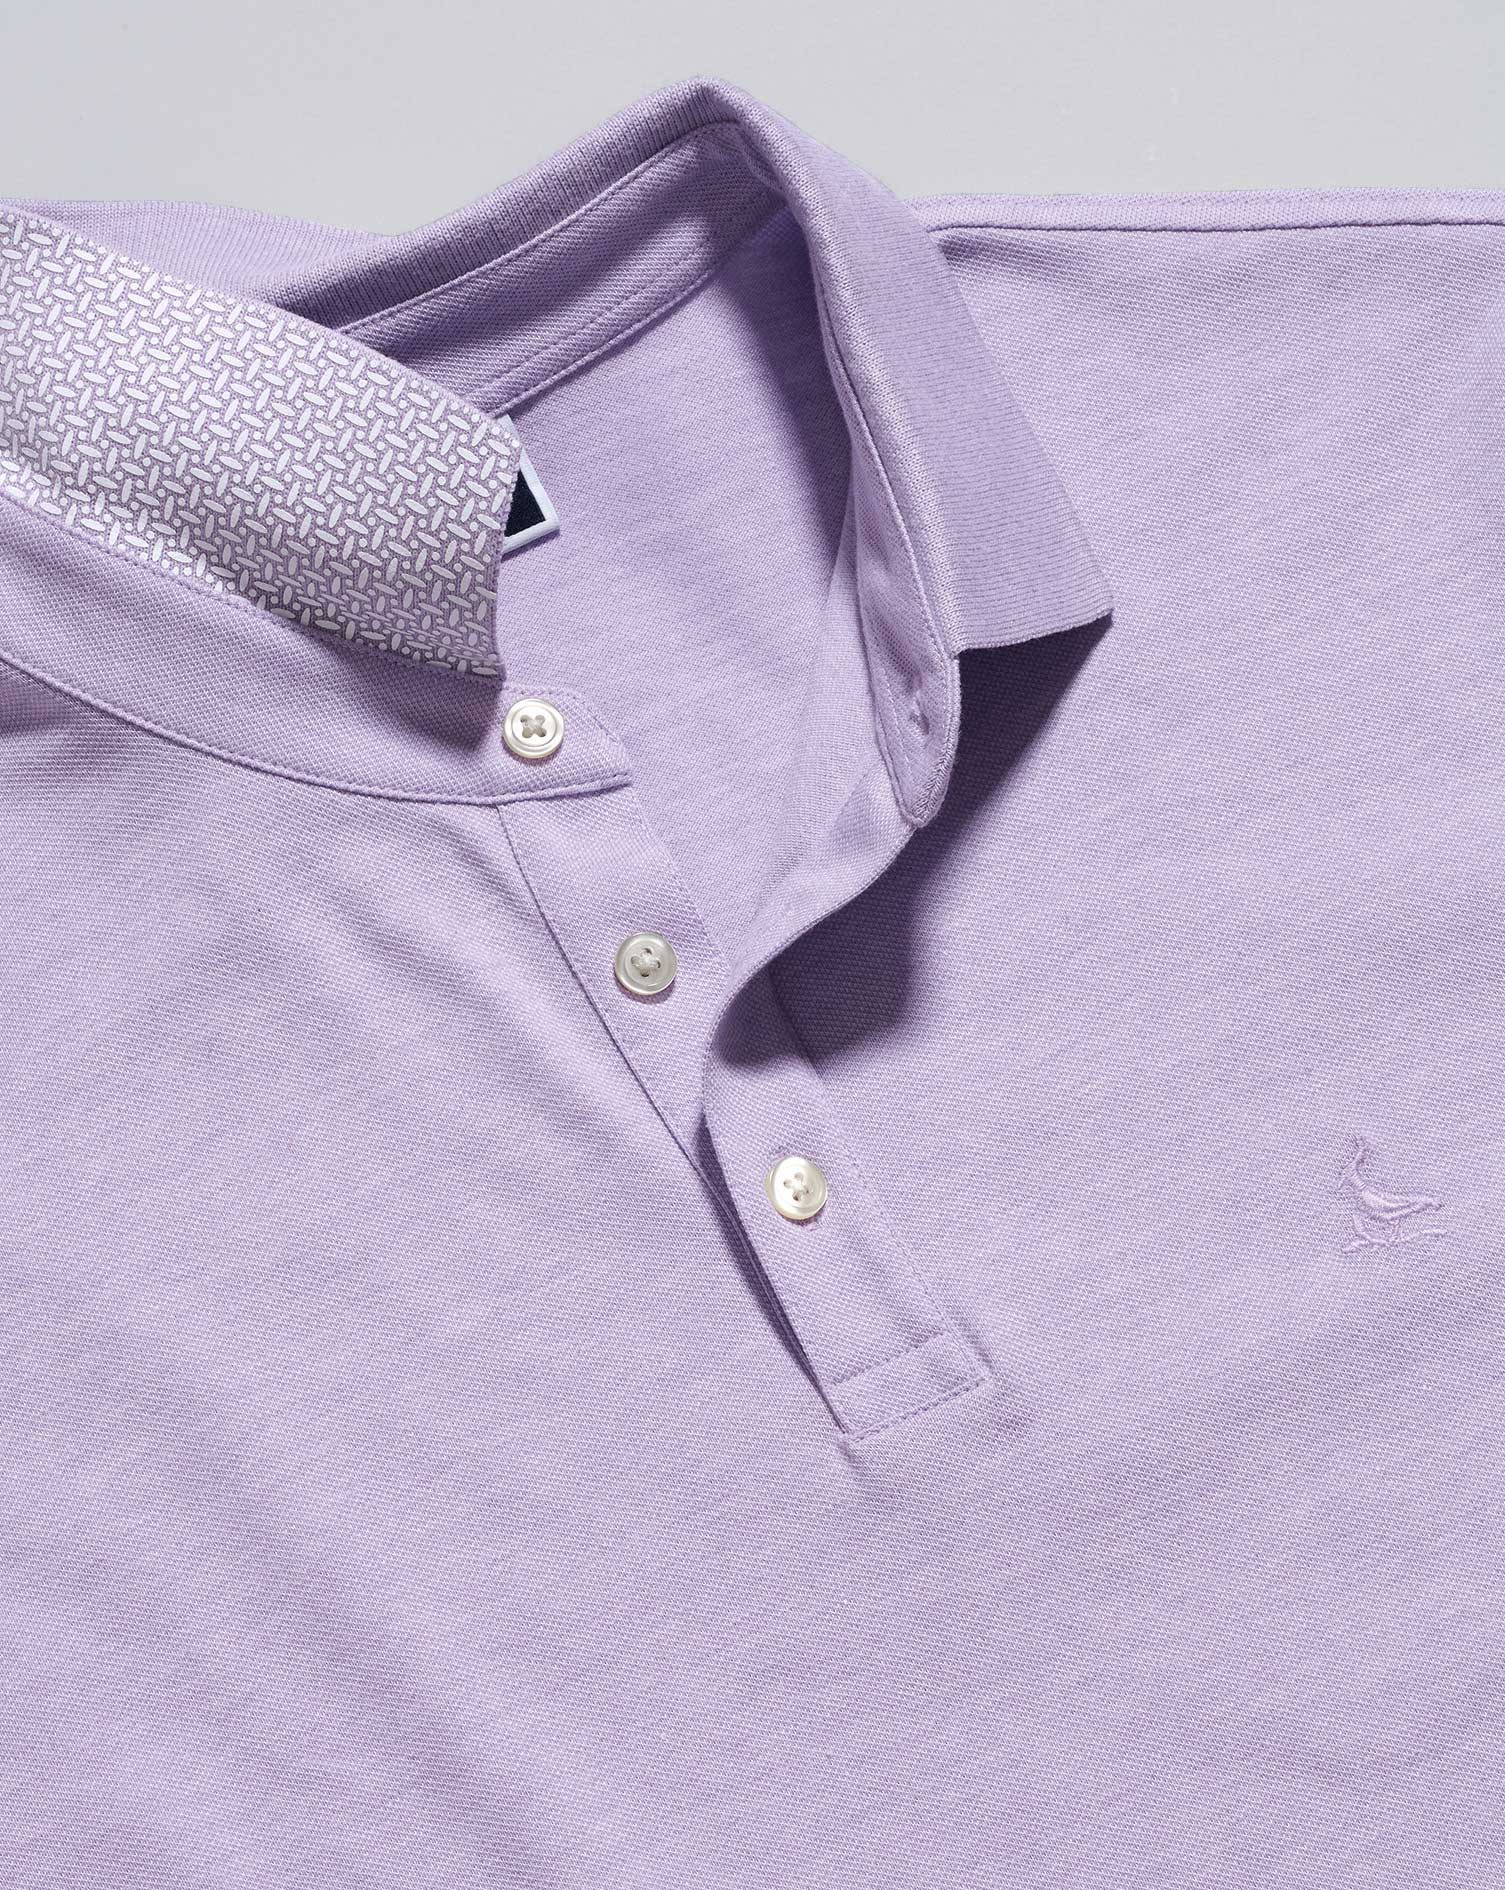 lacoste lilac polo shirt